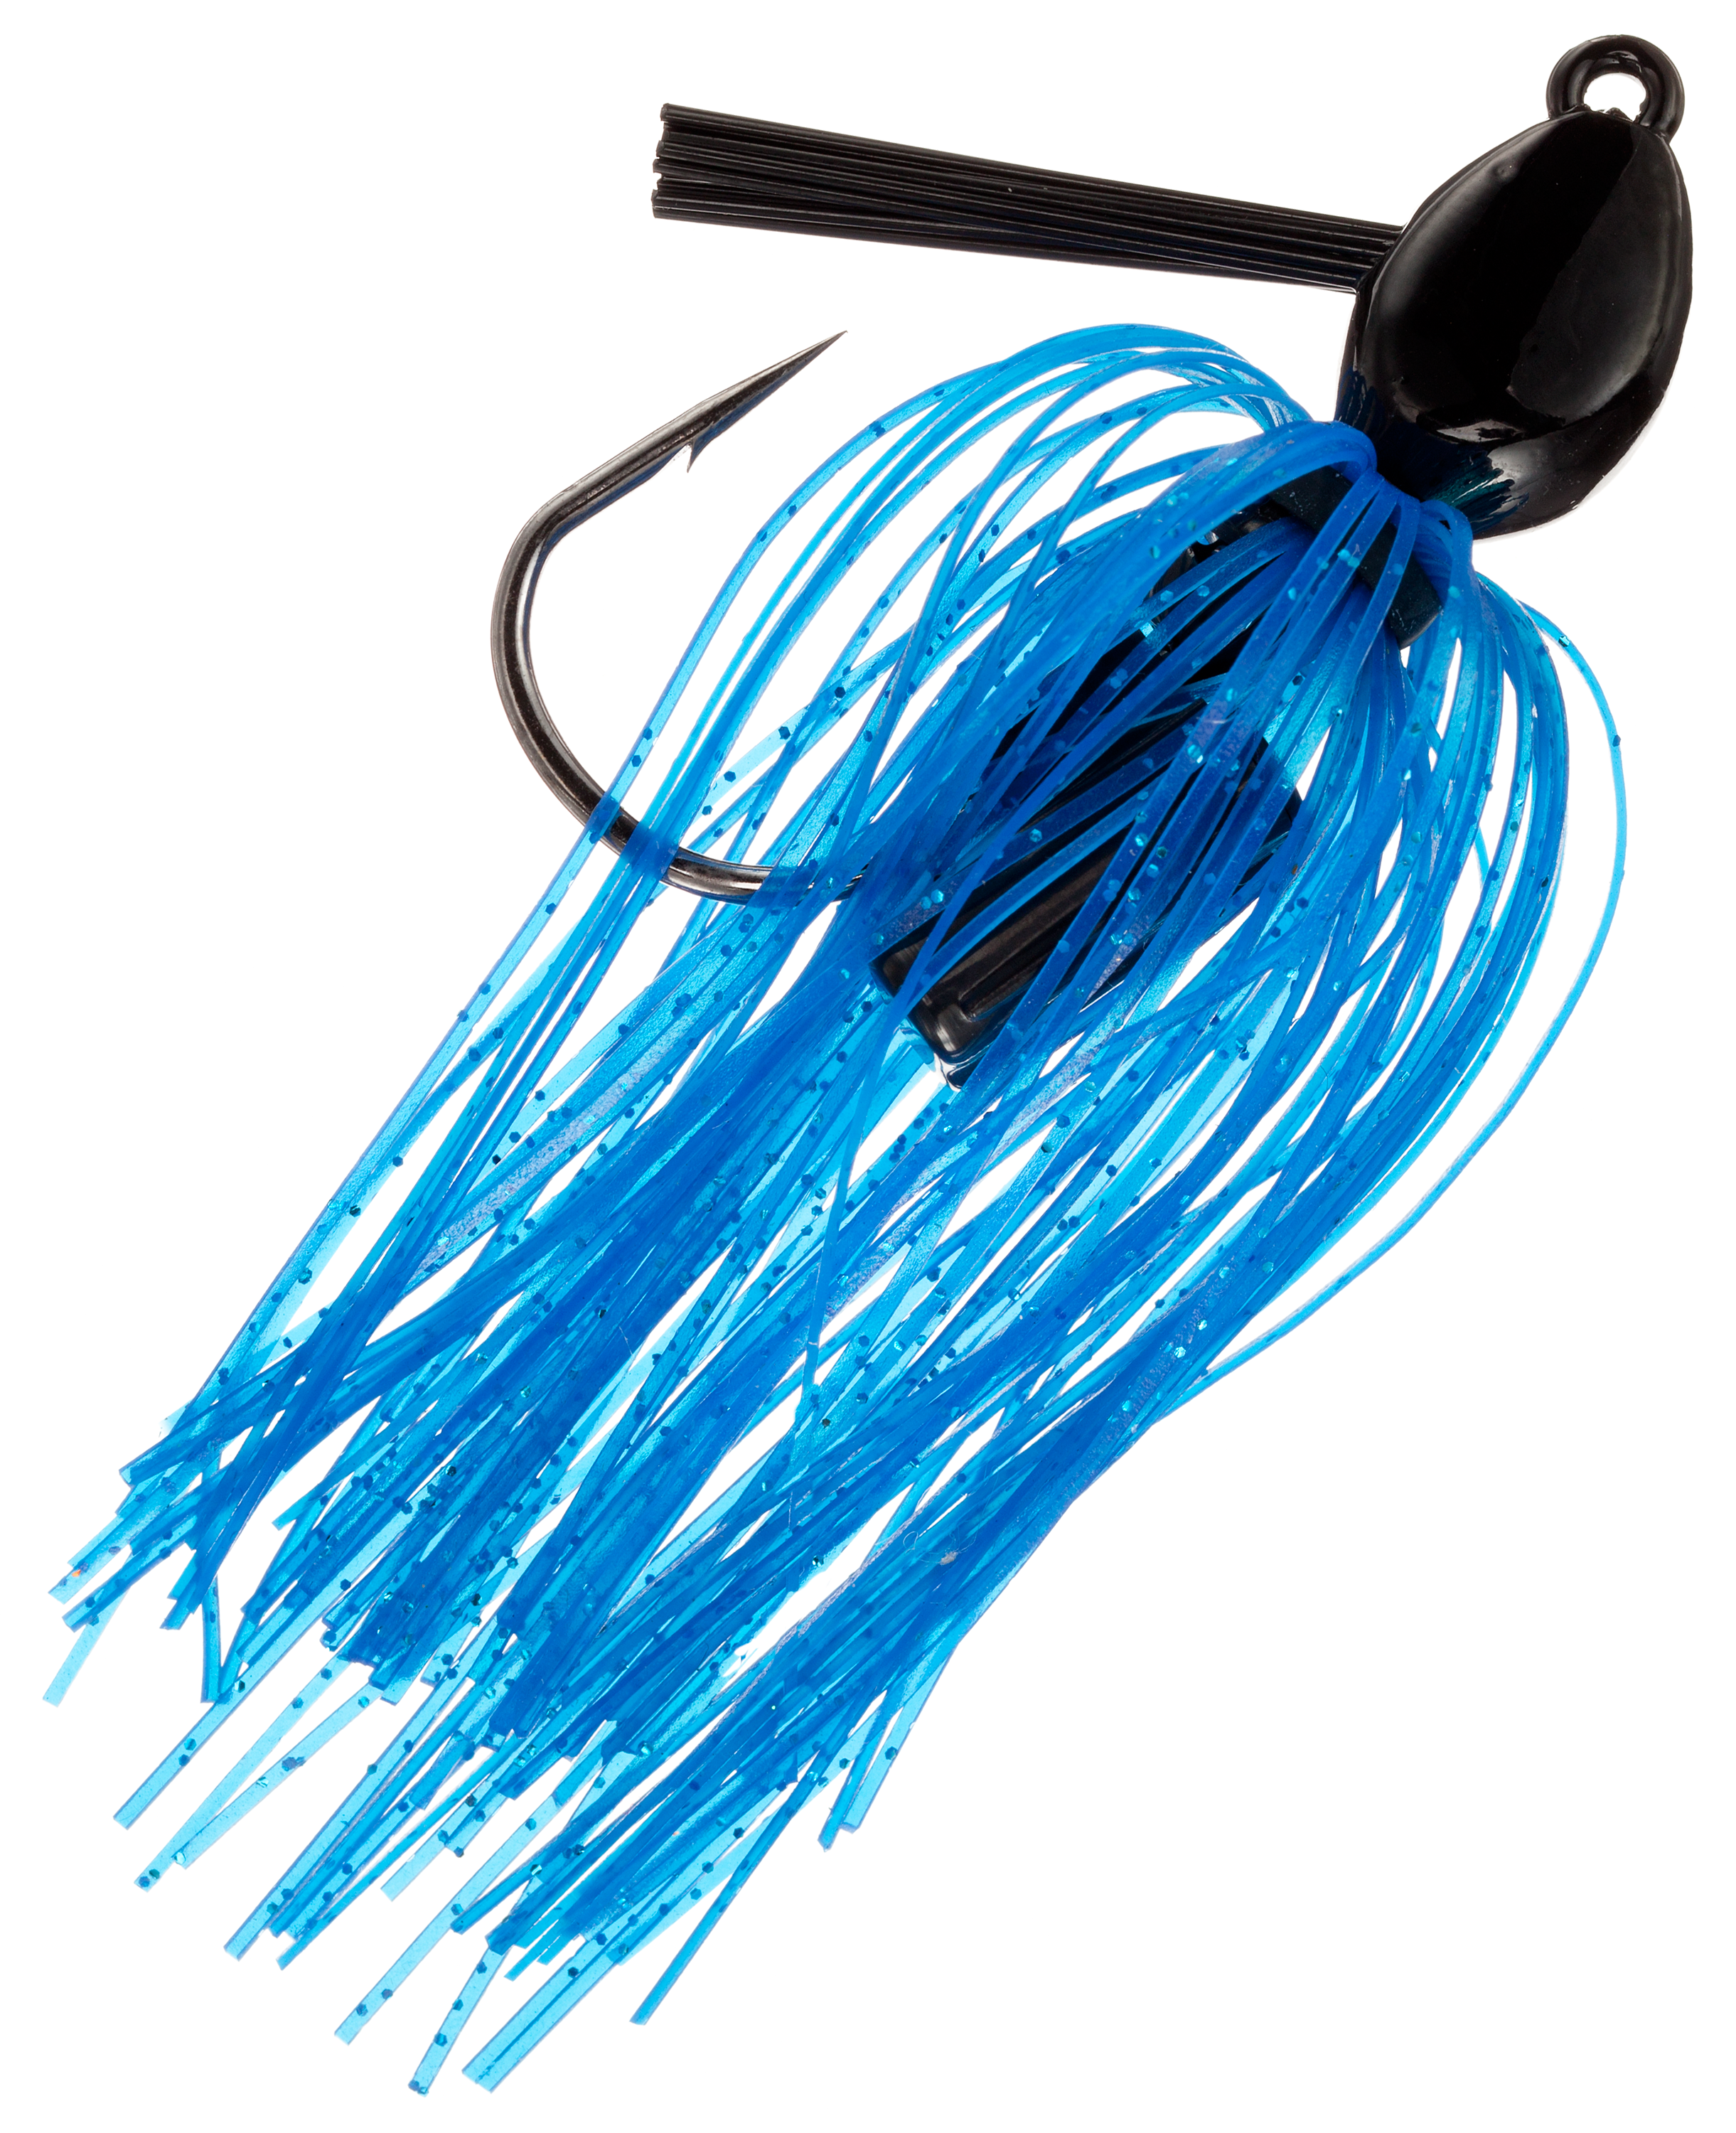 Bass Pro Shops Enticer Pro Series Rattling Jig - 1/2 oz - Electric Blue